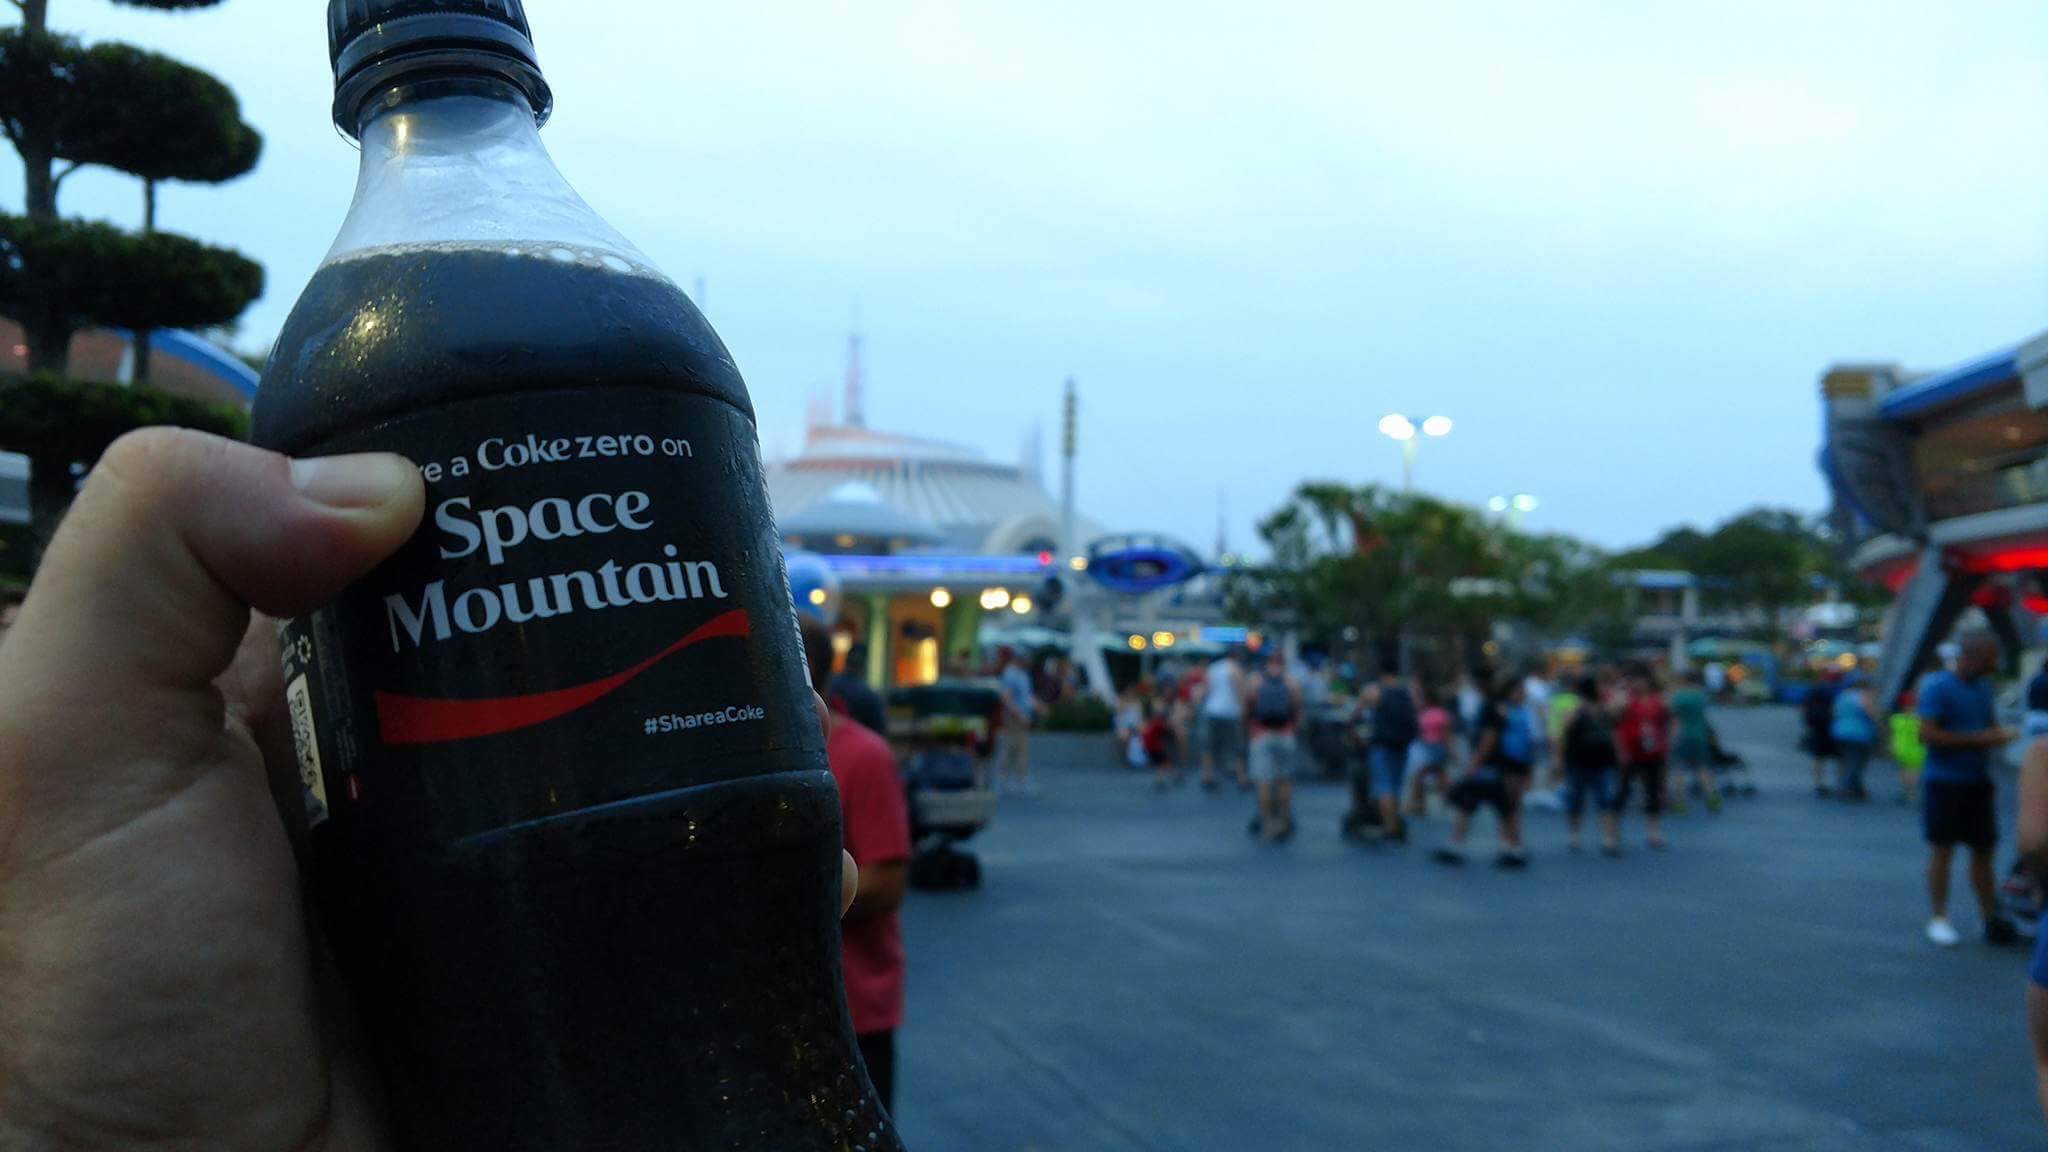 The Coca-Cola ‘Share a Coke’ Campaign hits Walt Disney World